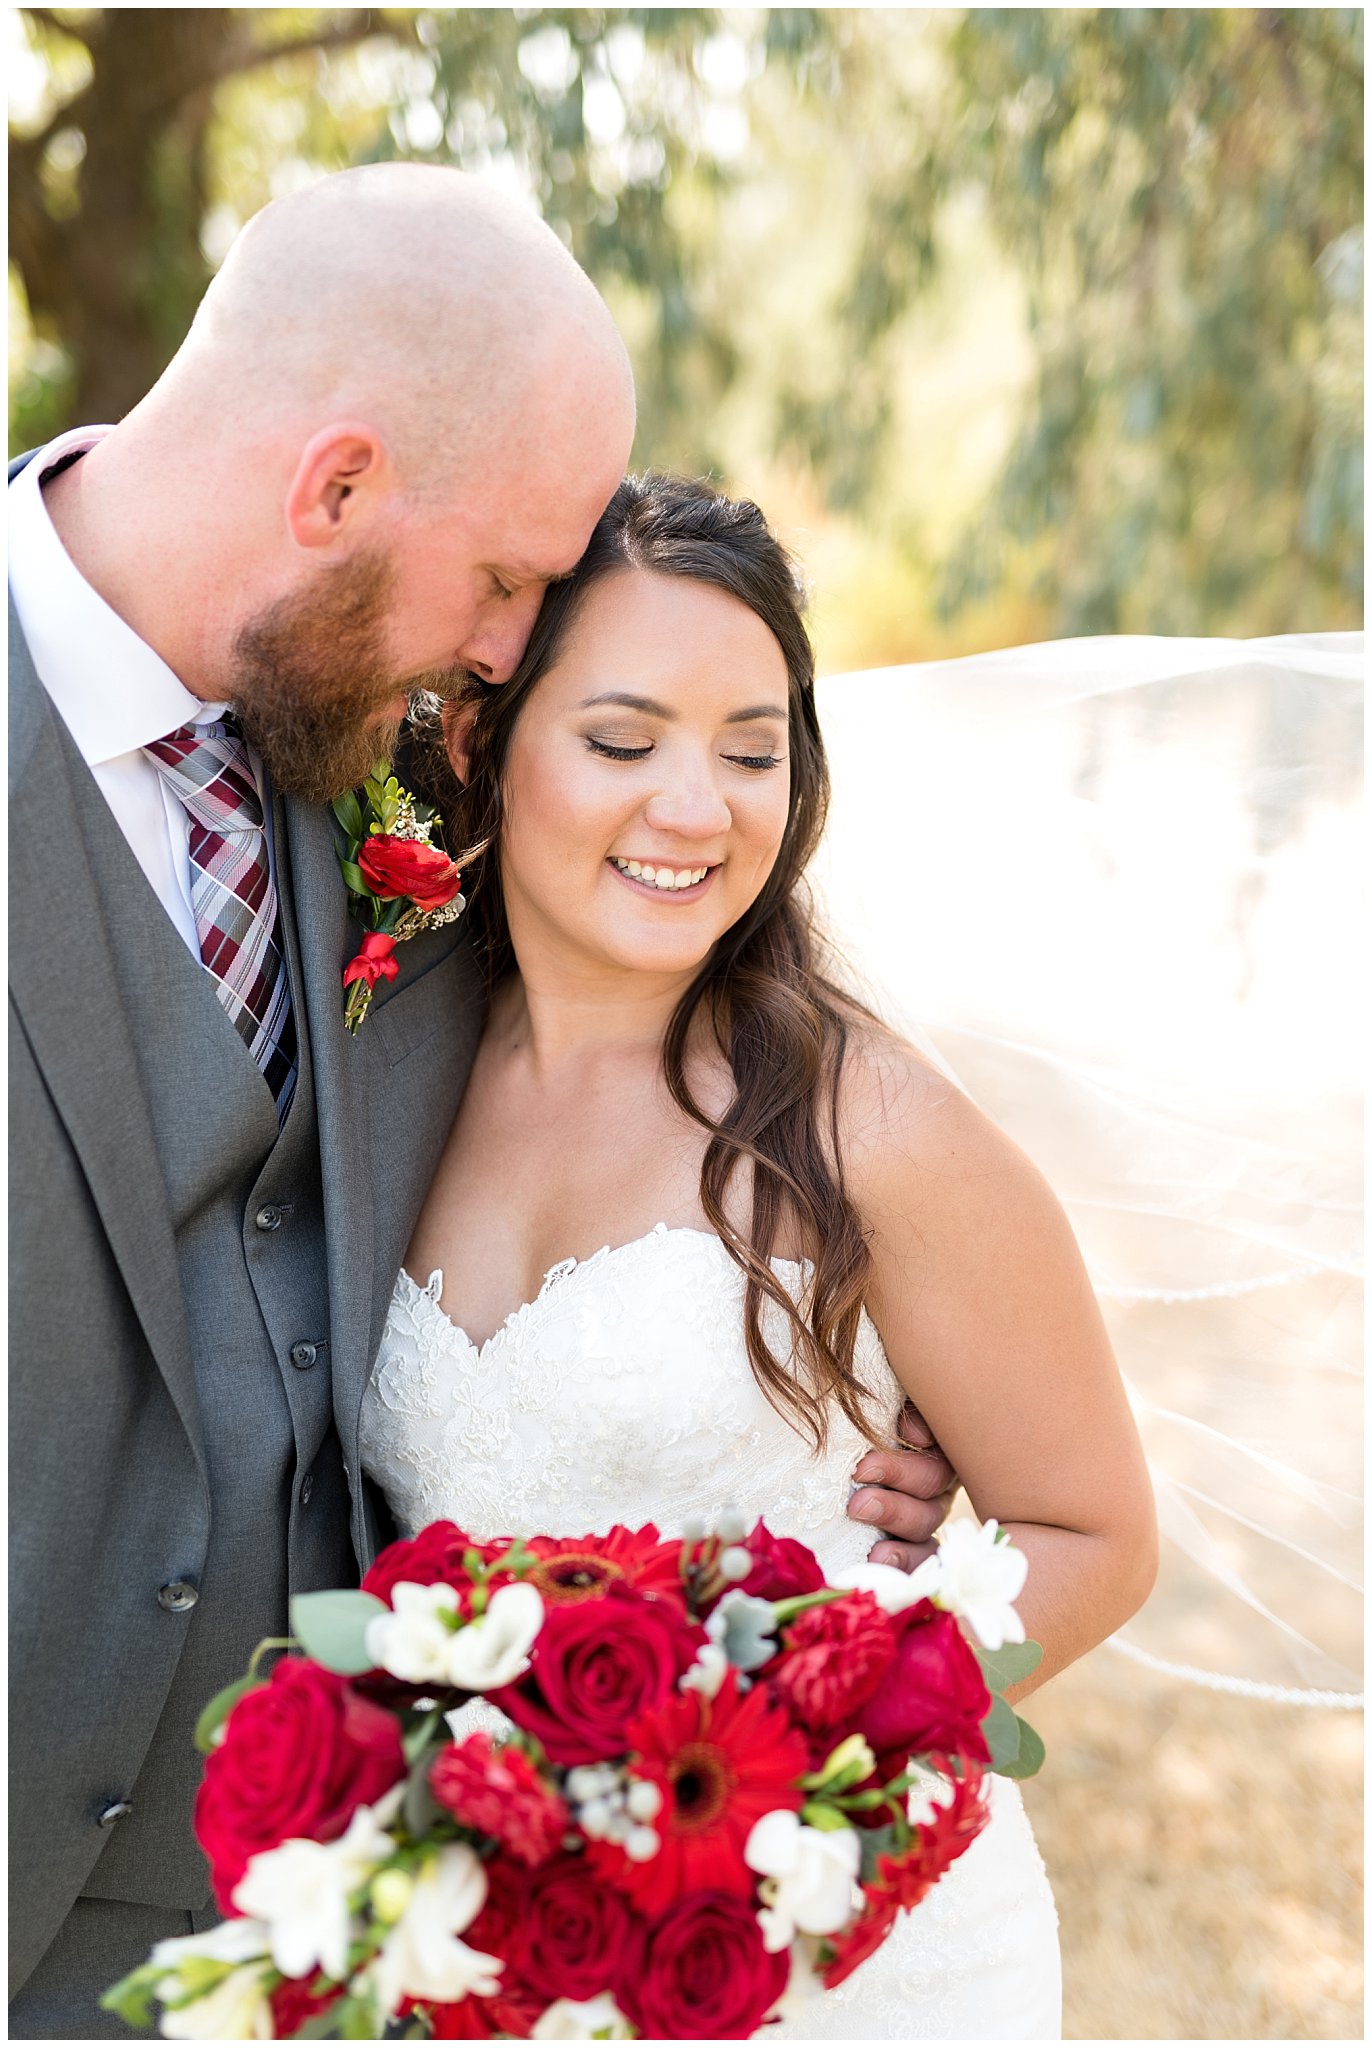 Joyful, elegant bride and groom portrait in the trees | Davis County Outdoor Wedding | Jessie and Dallin Photography